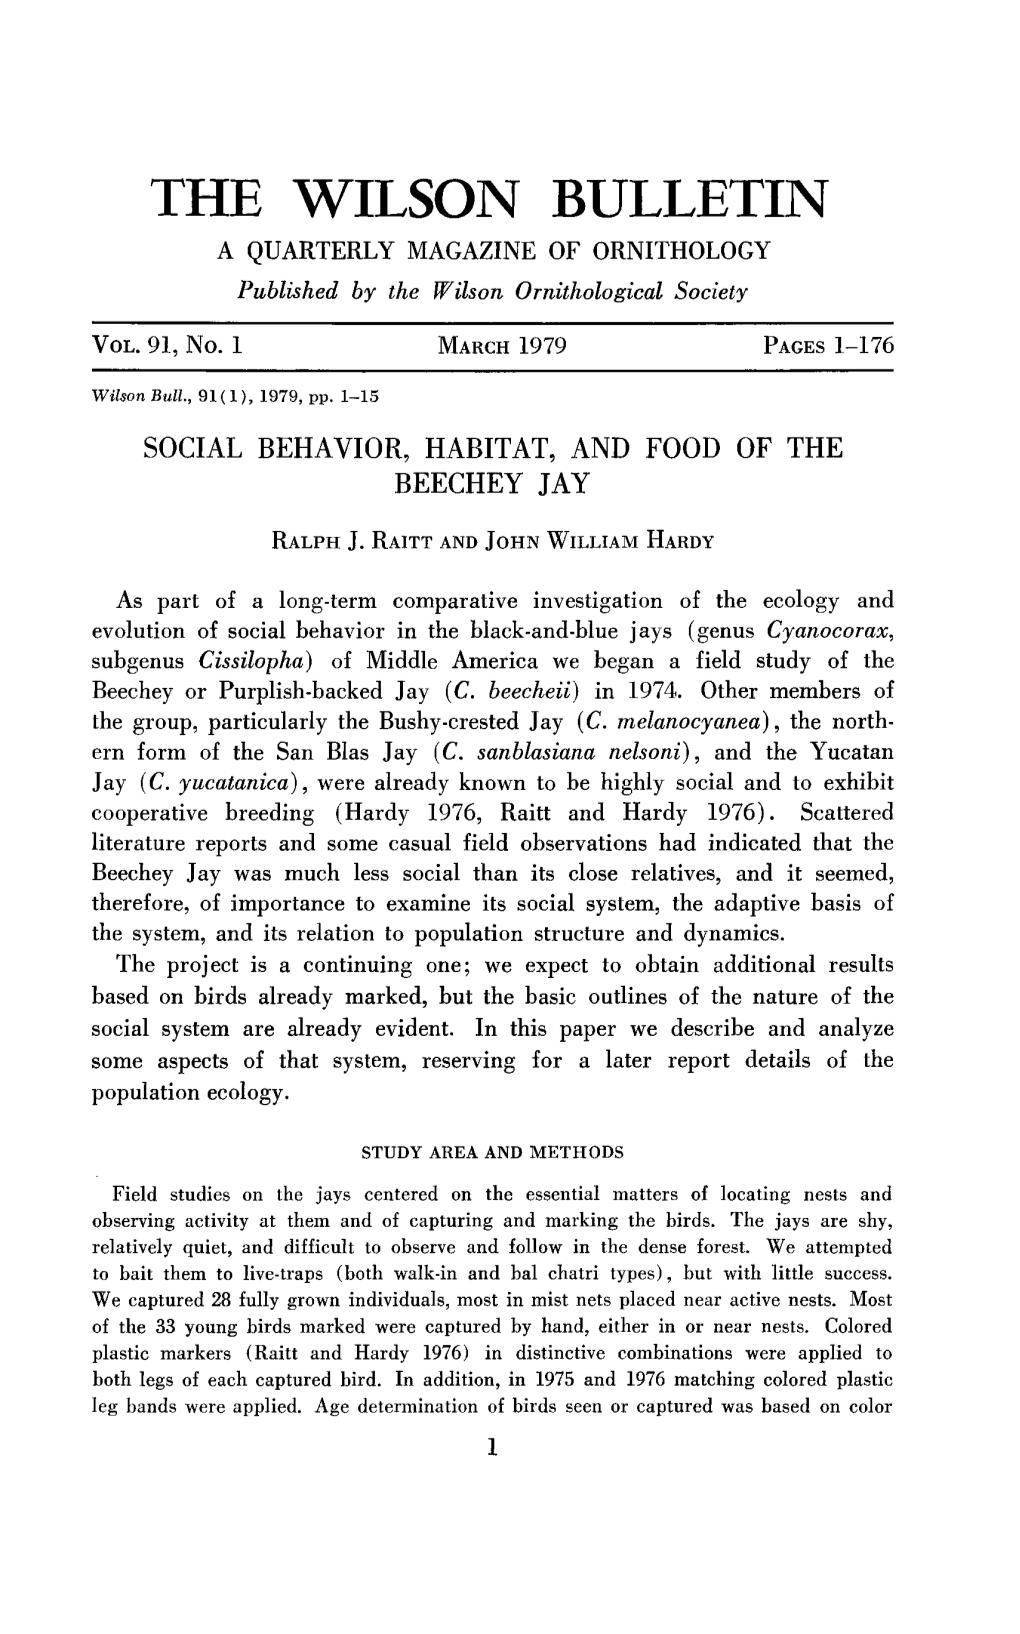 Social Behavior, Habitat, and Food of the Beechey Jay